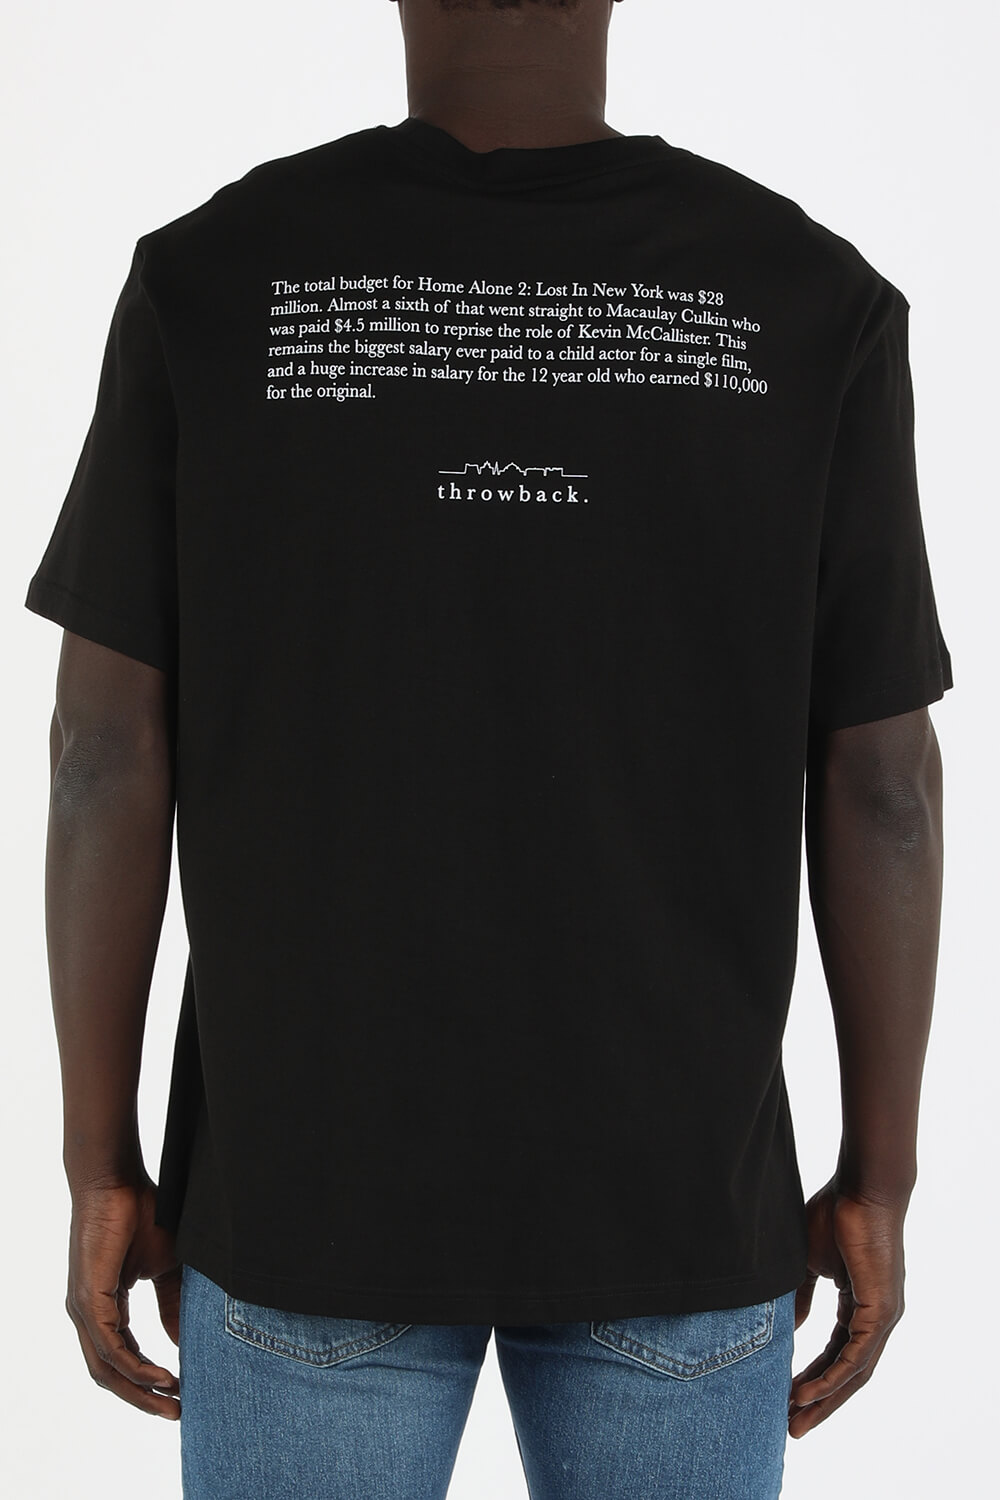 Kevin Print Tshirt in Black THROWBACK